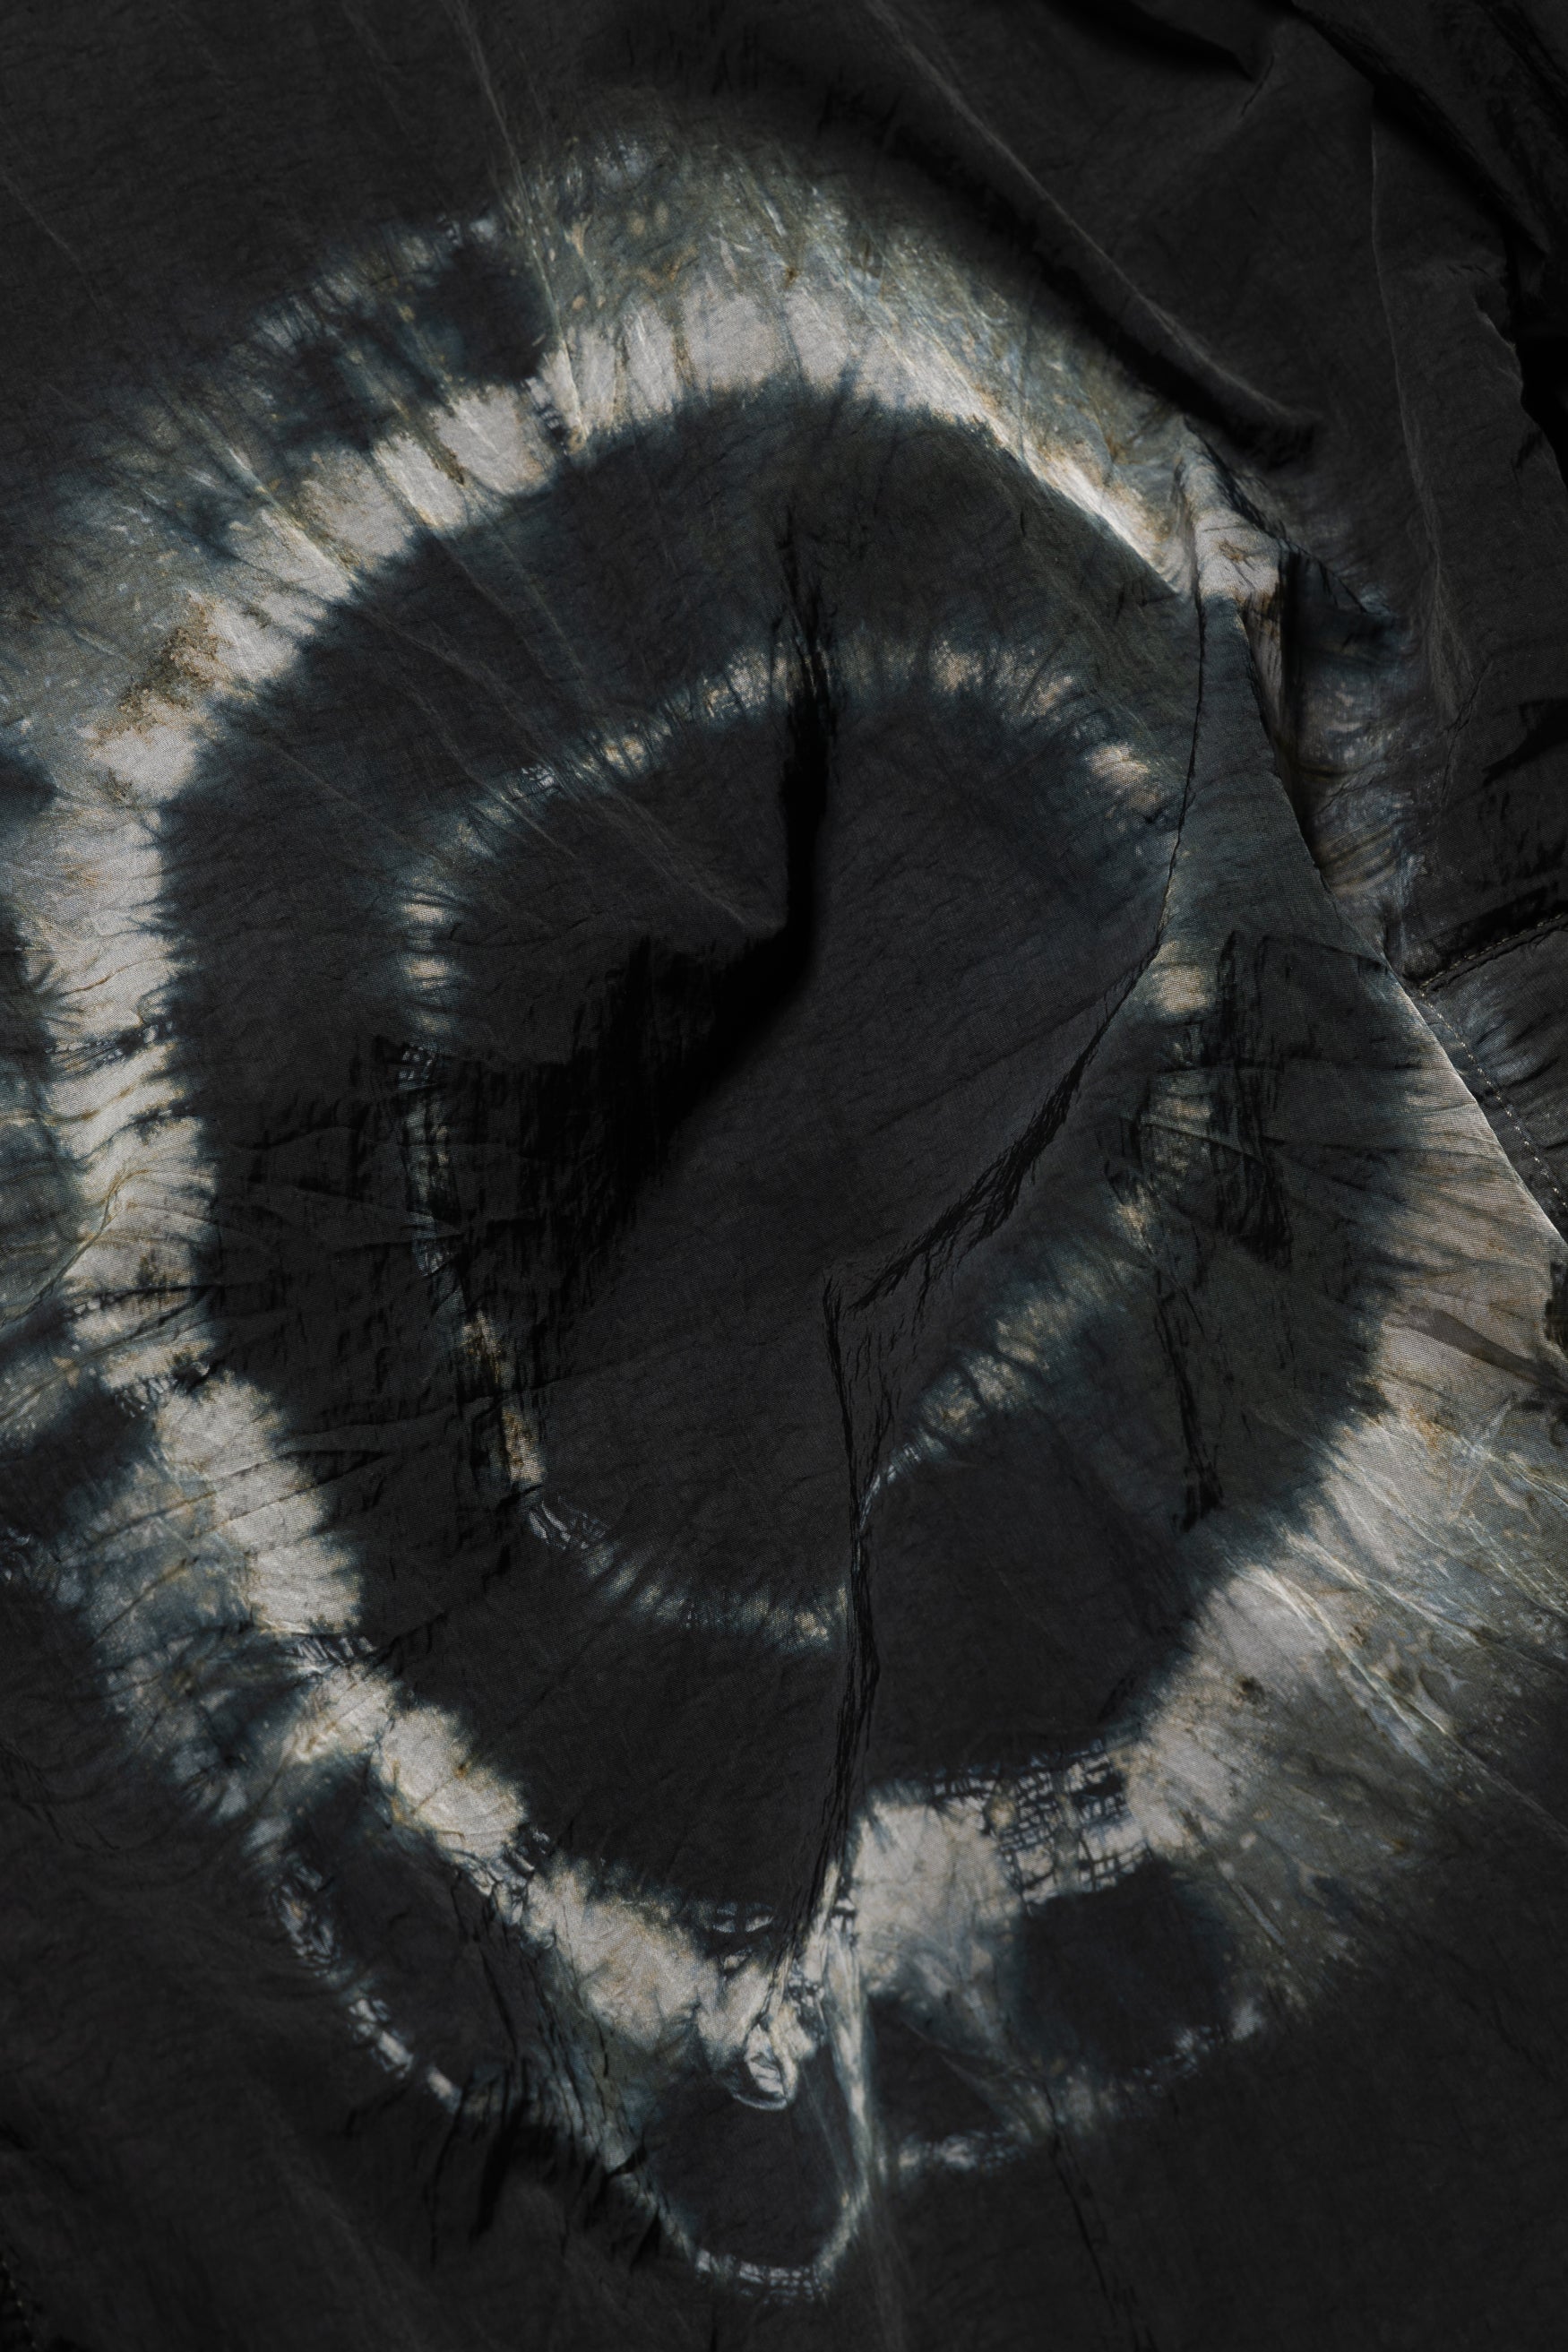 Load image into Gallery viewer, Tie-Dye Windcheater Jacket